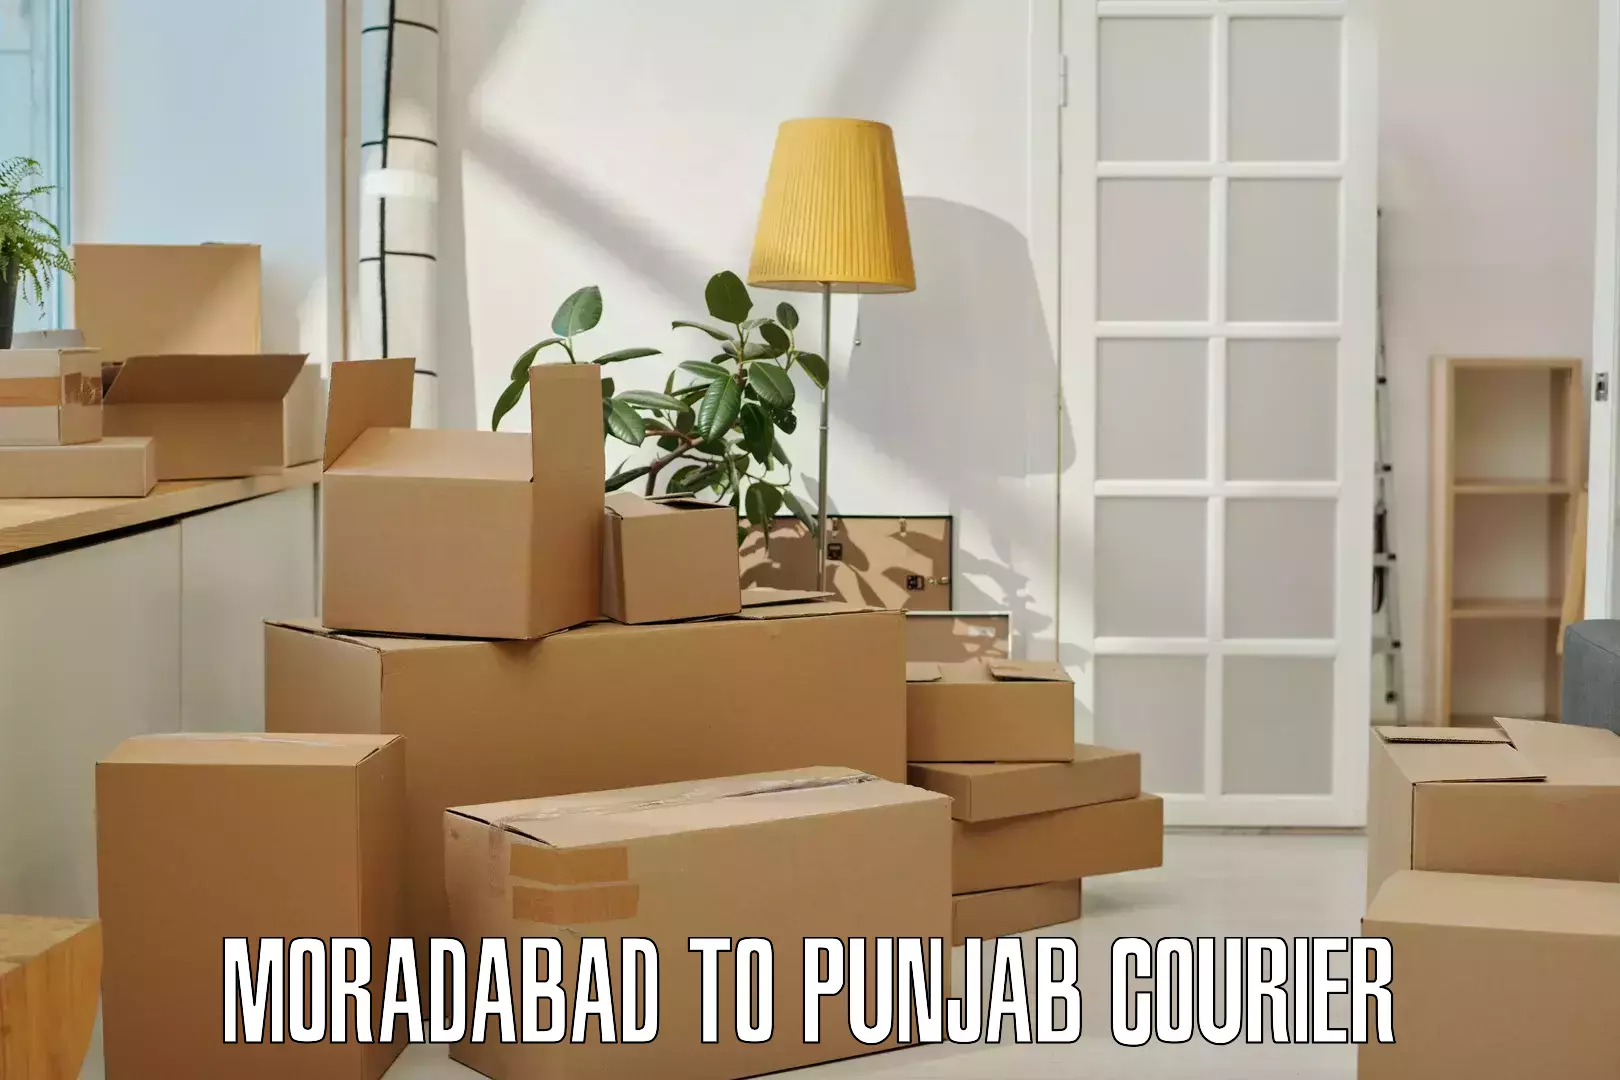 Courier service partnerships Moradabad to Punjab